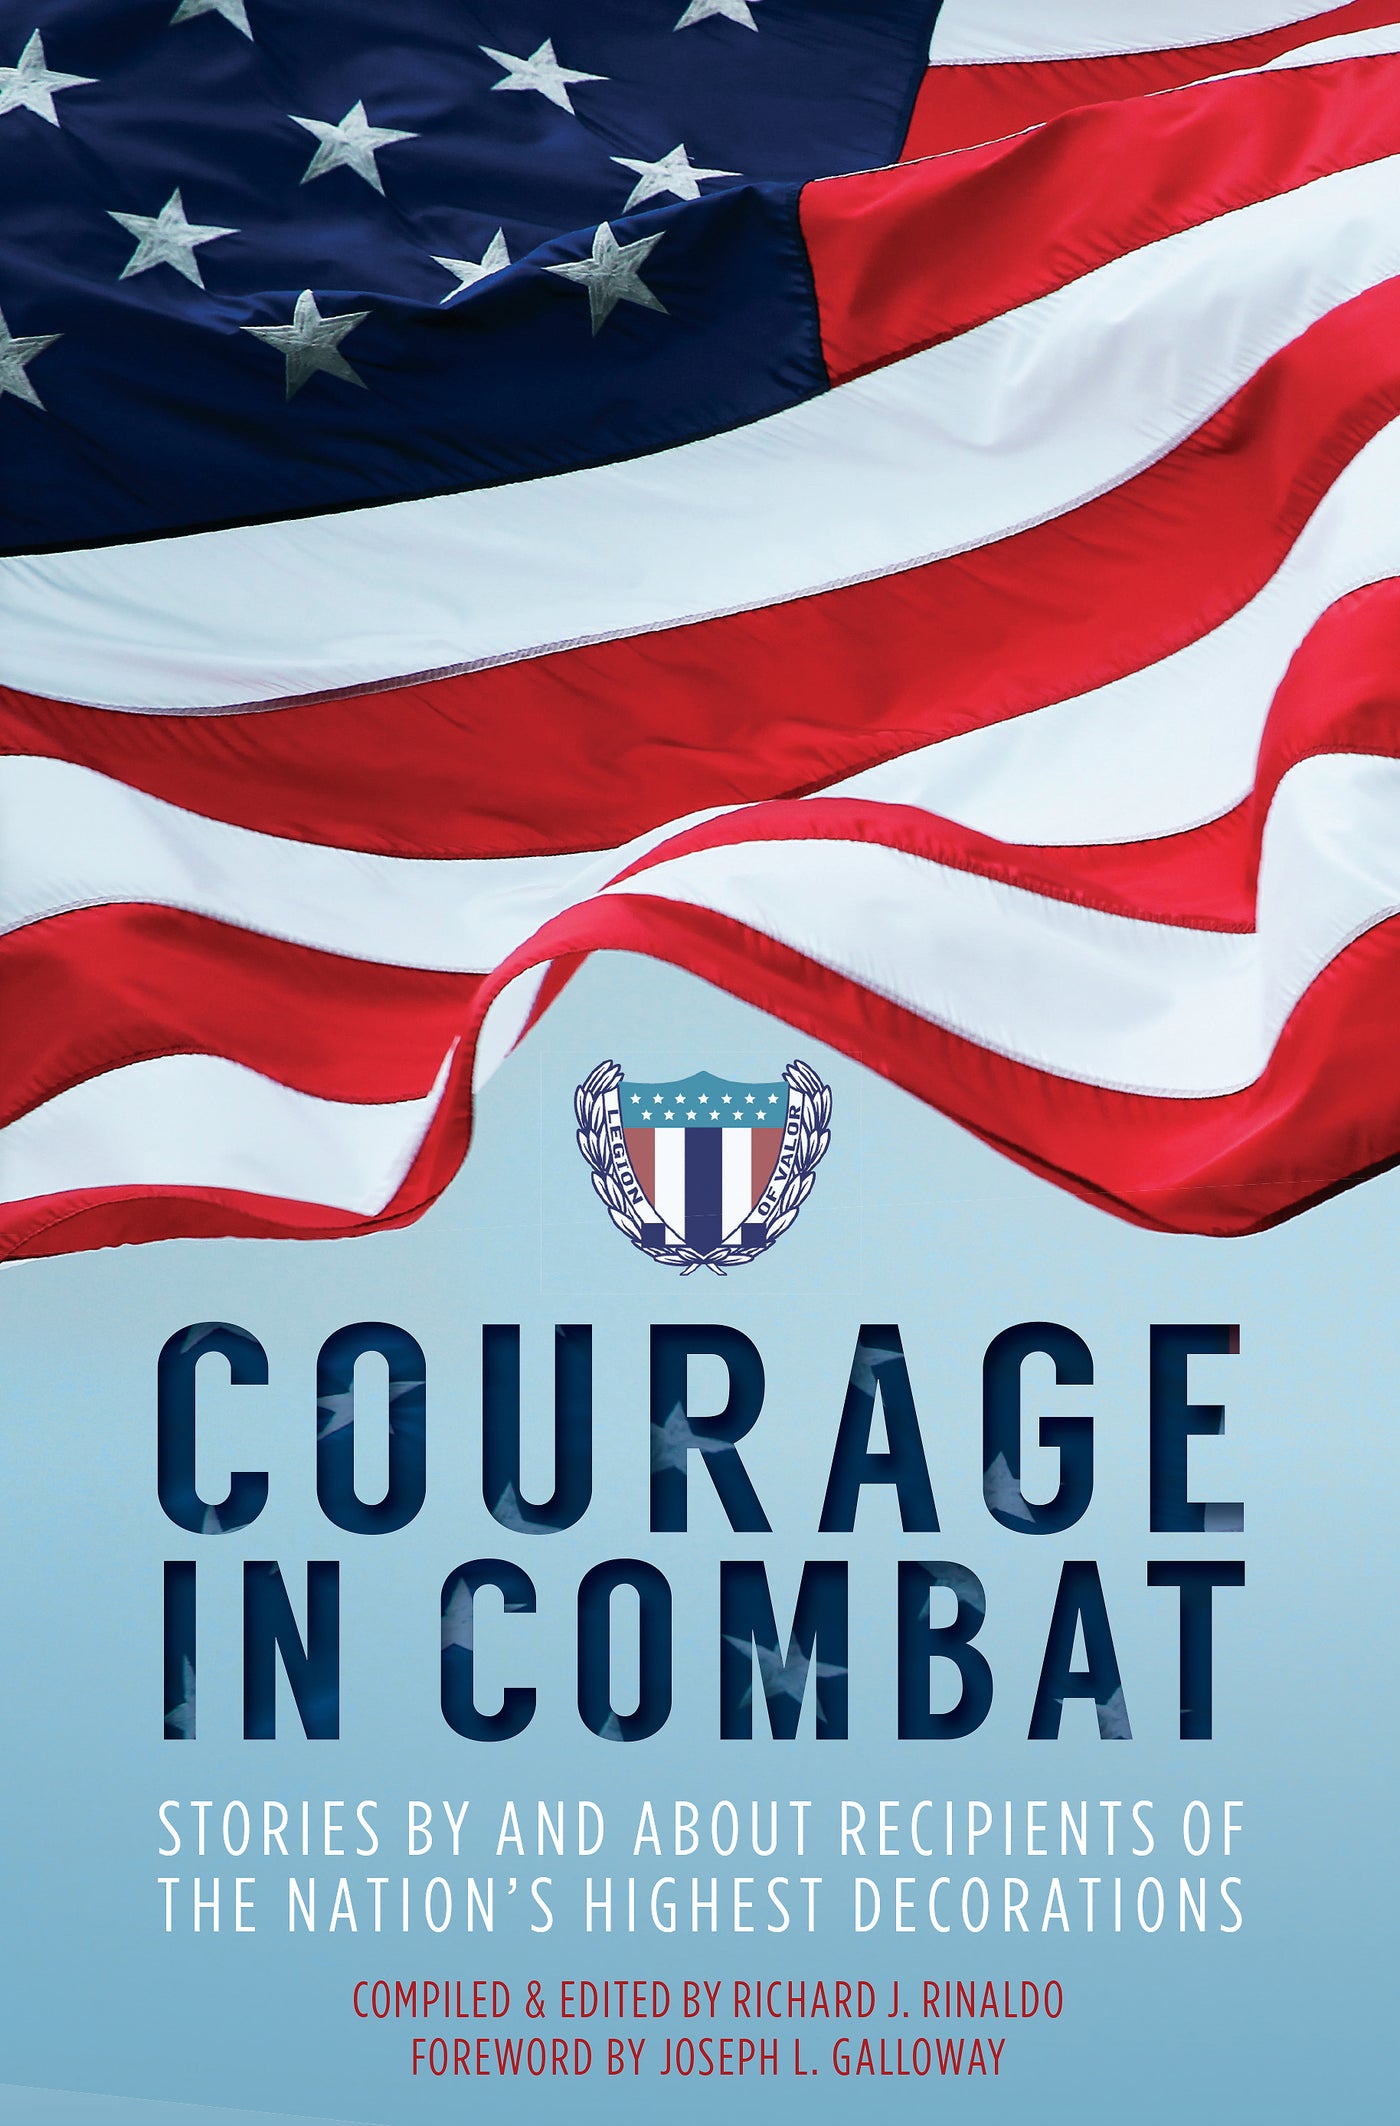 Courage in Combat